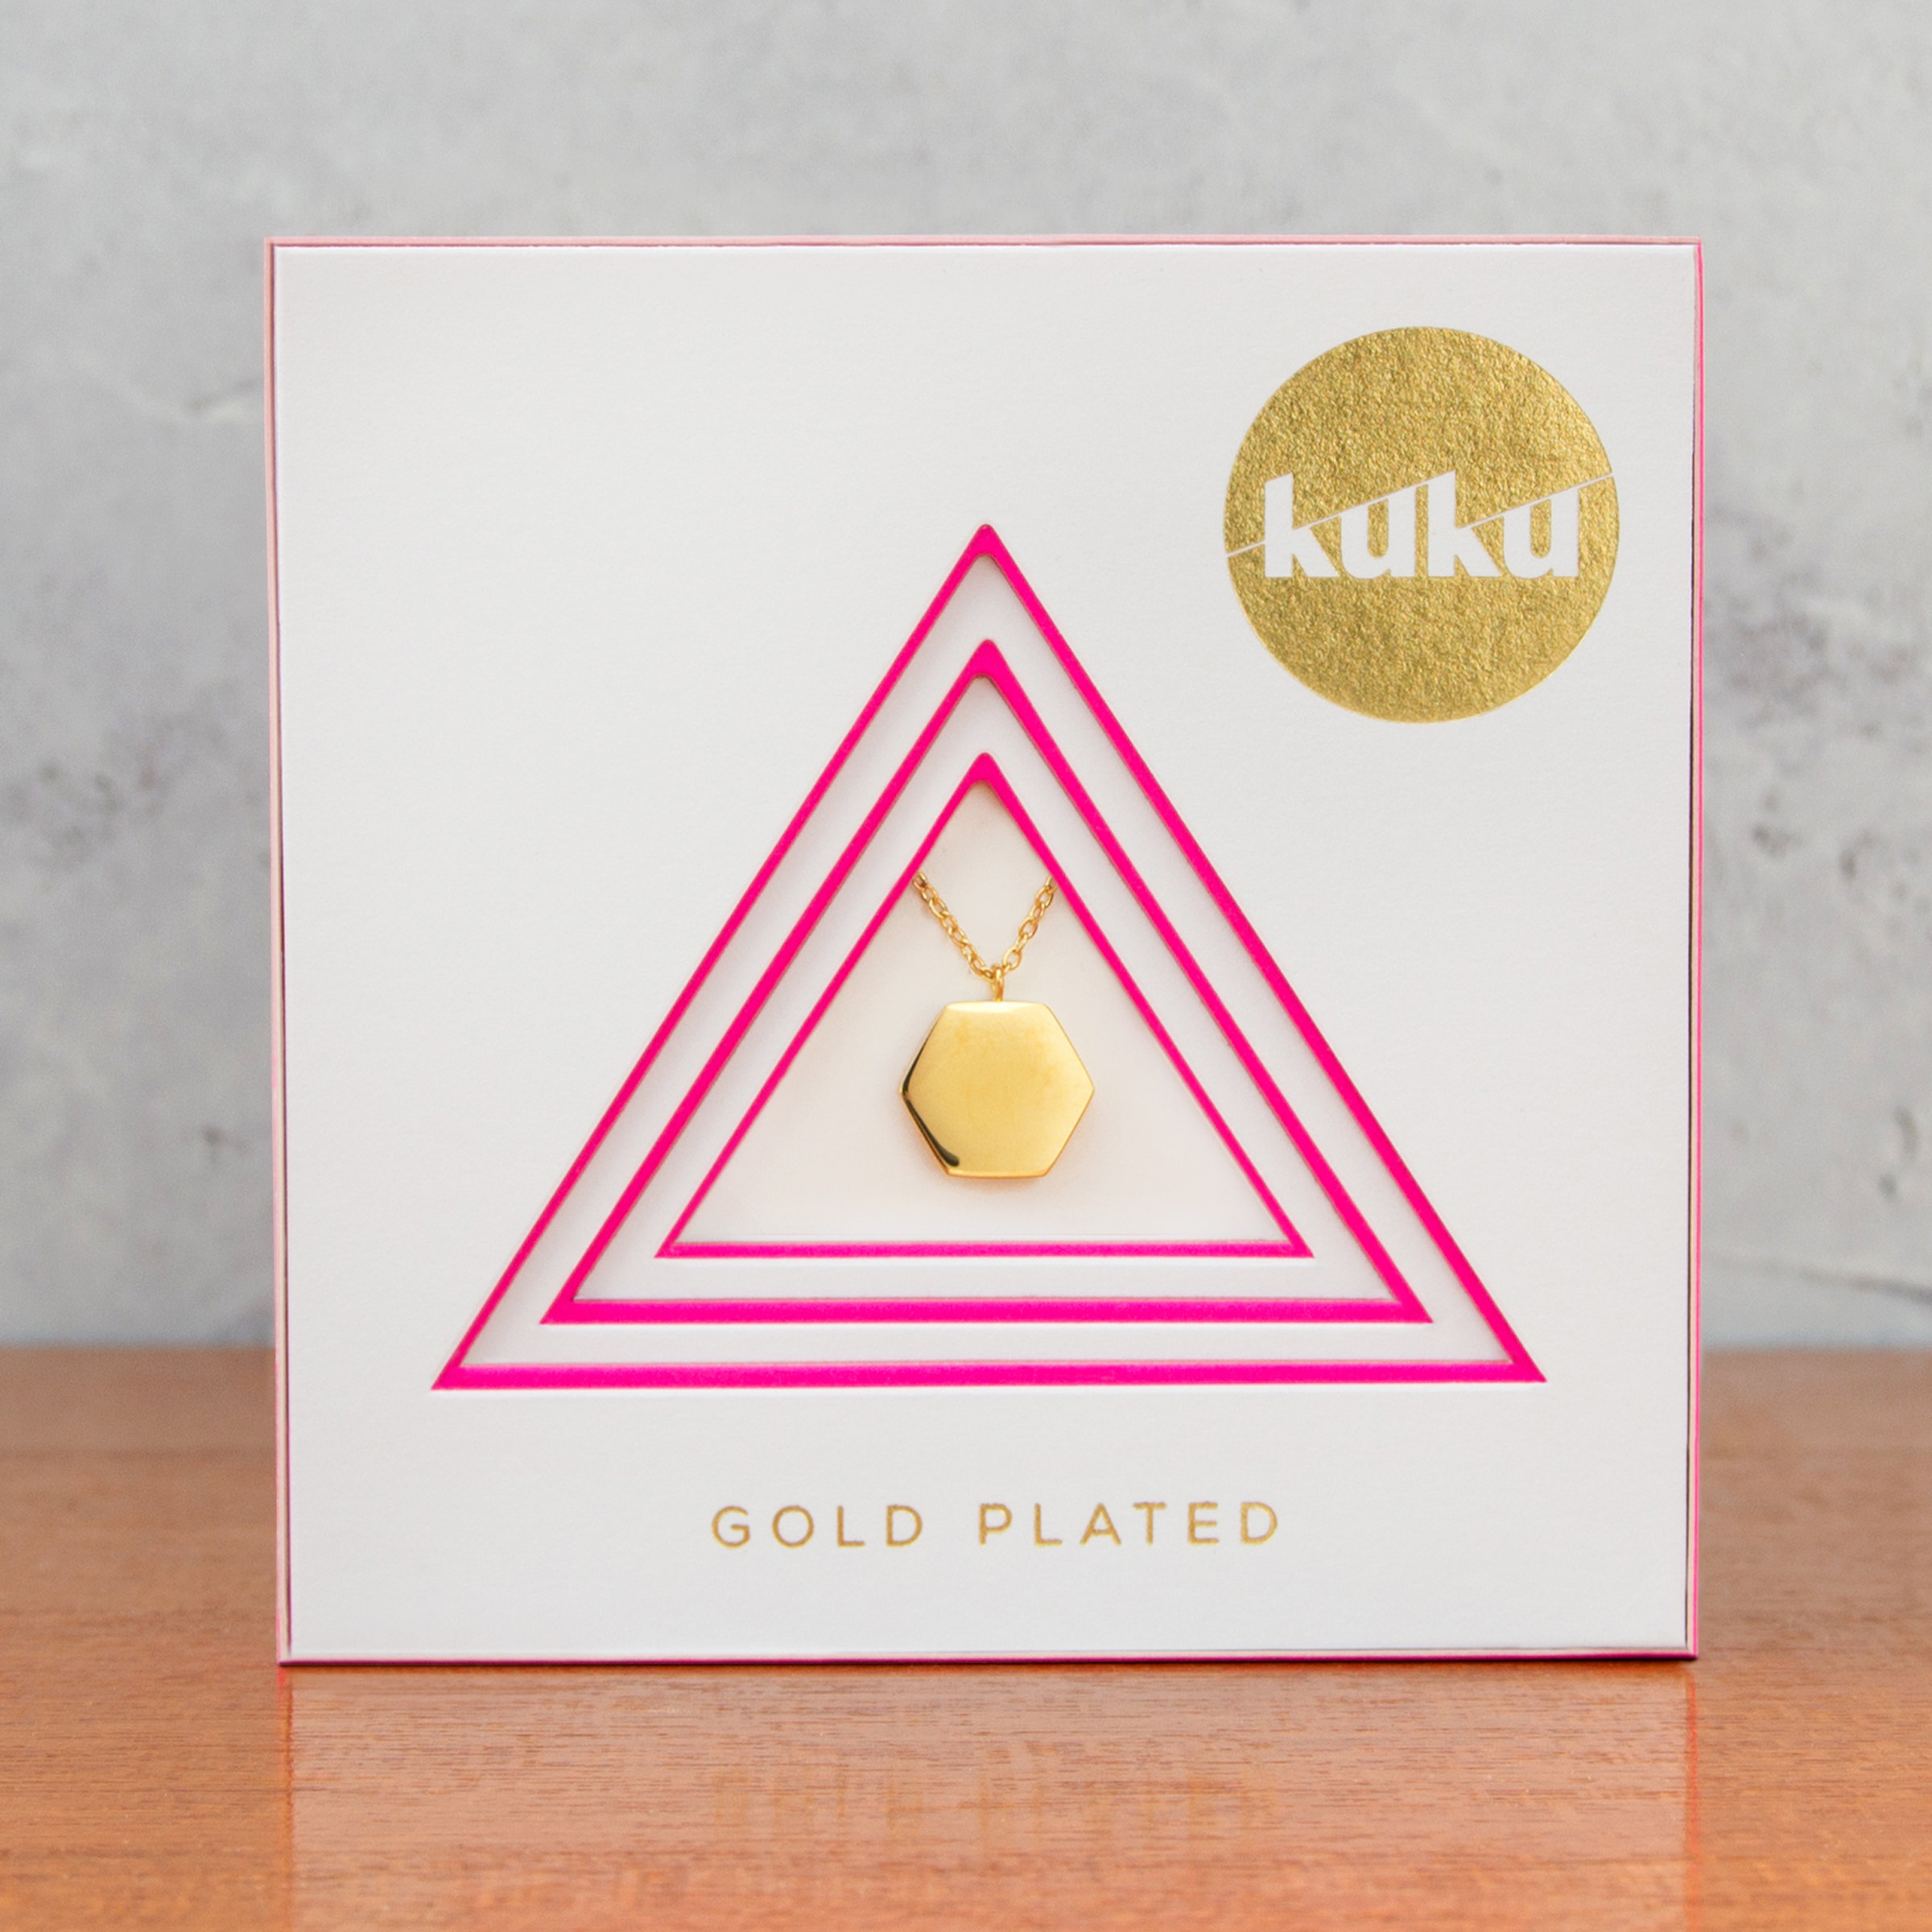 Kuku gold hexagon necklace in packaging